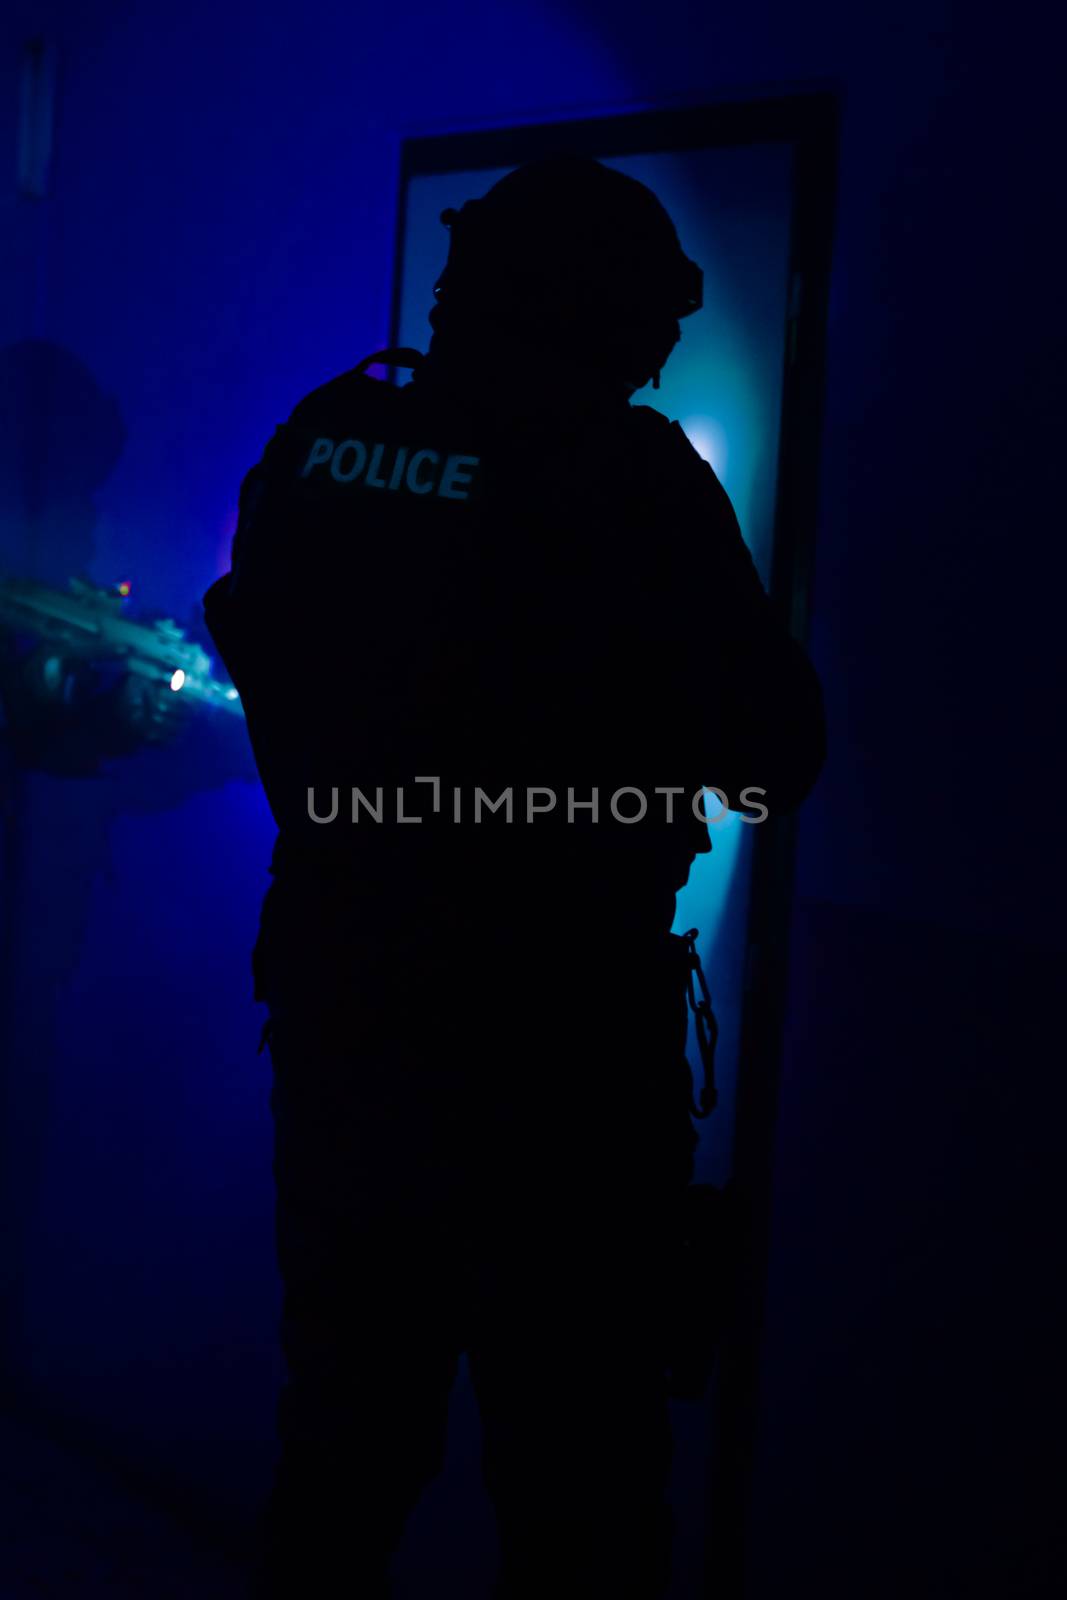 A special police unit arresting a criminal by Edophoto